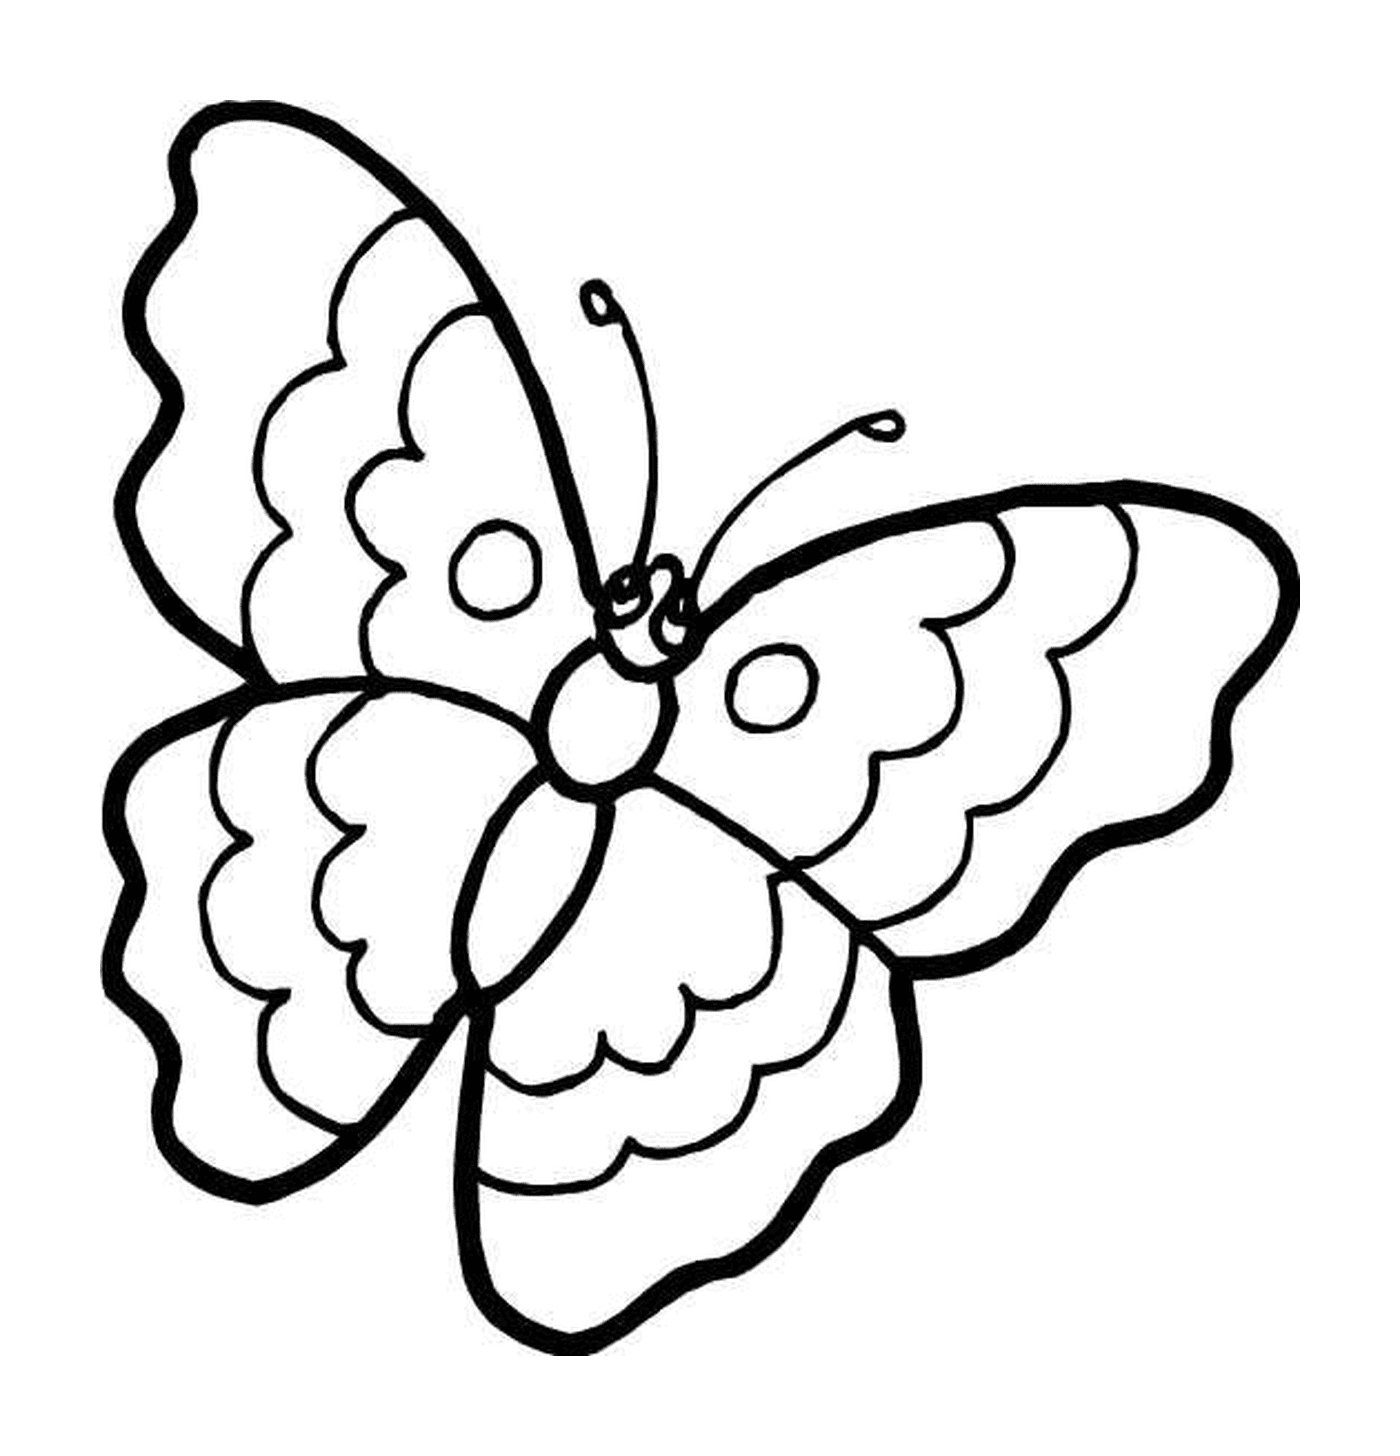  Zarter Schmetterling mit kräftigen Mustern 